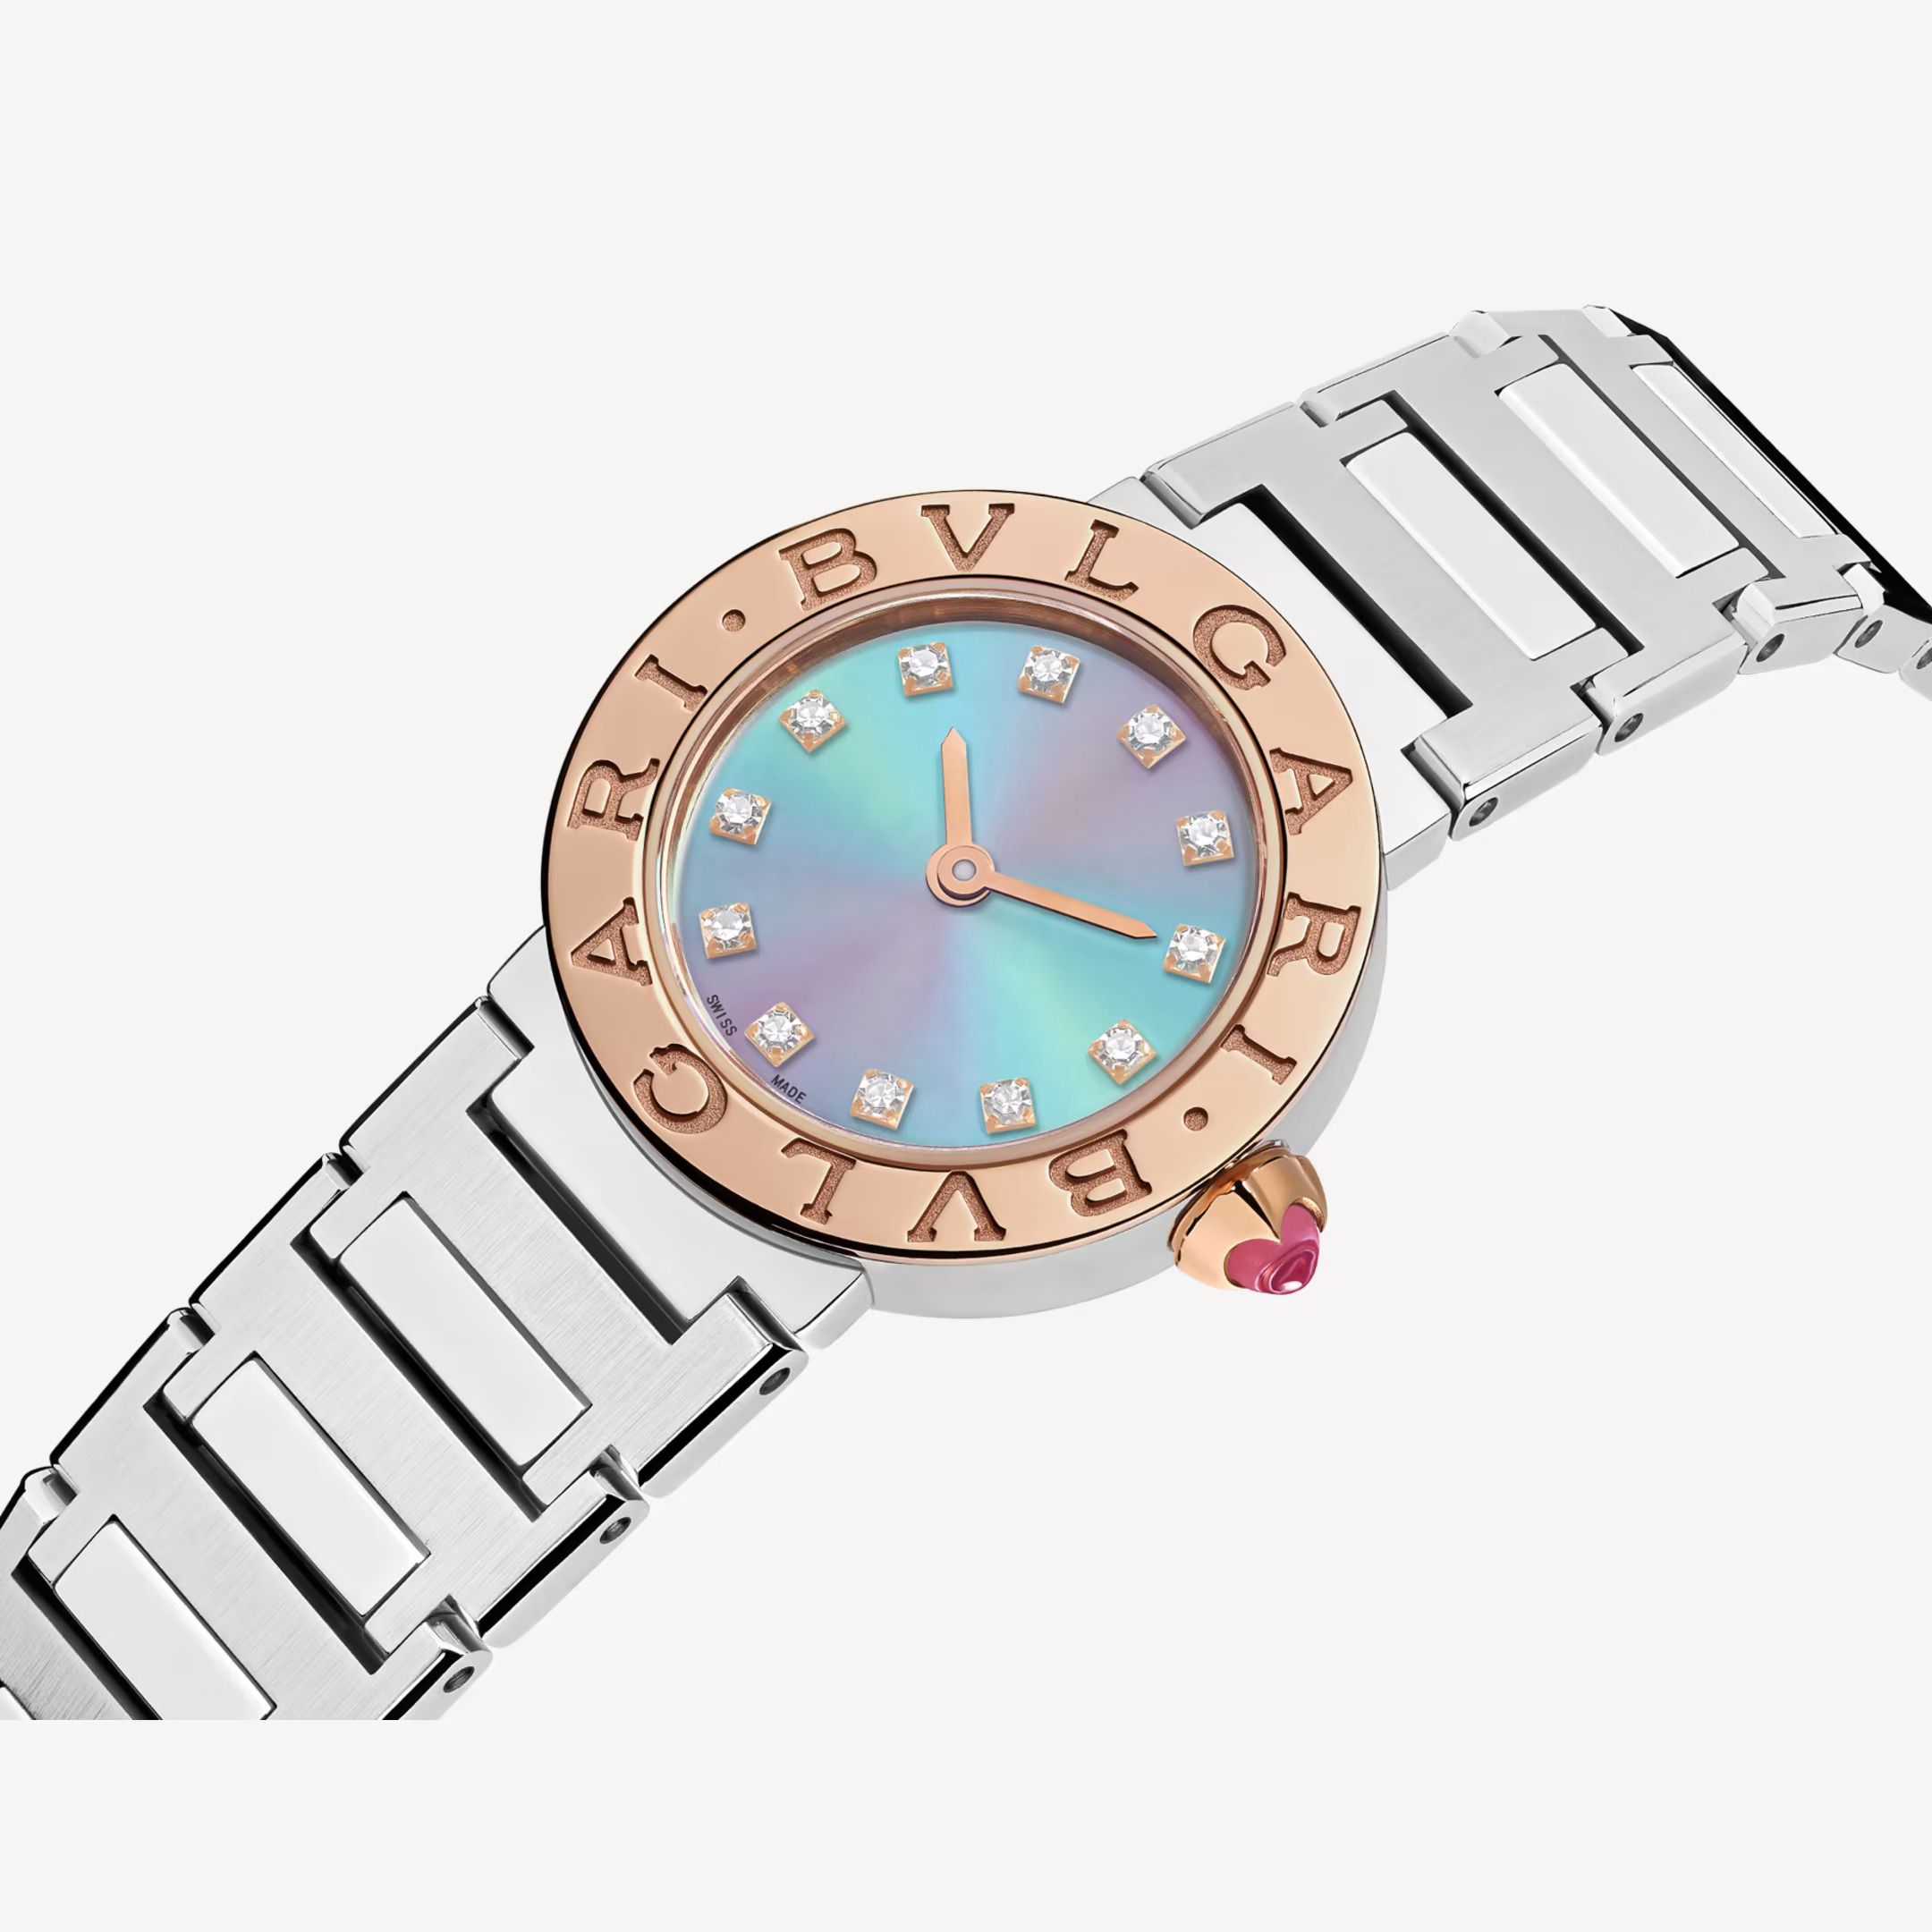 The Bulgari Bulgari x Lisa Limited Edition watch